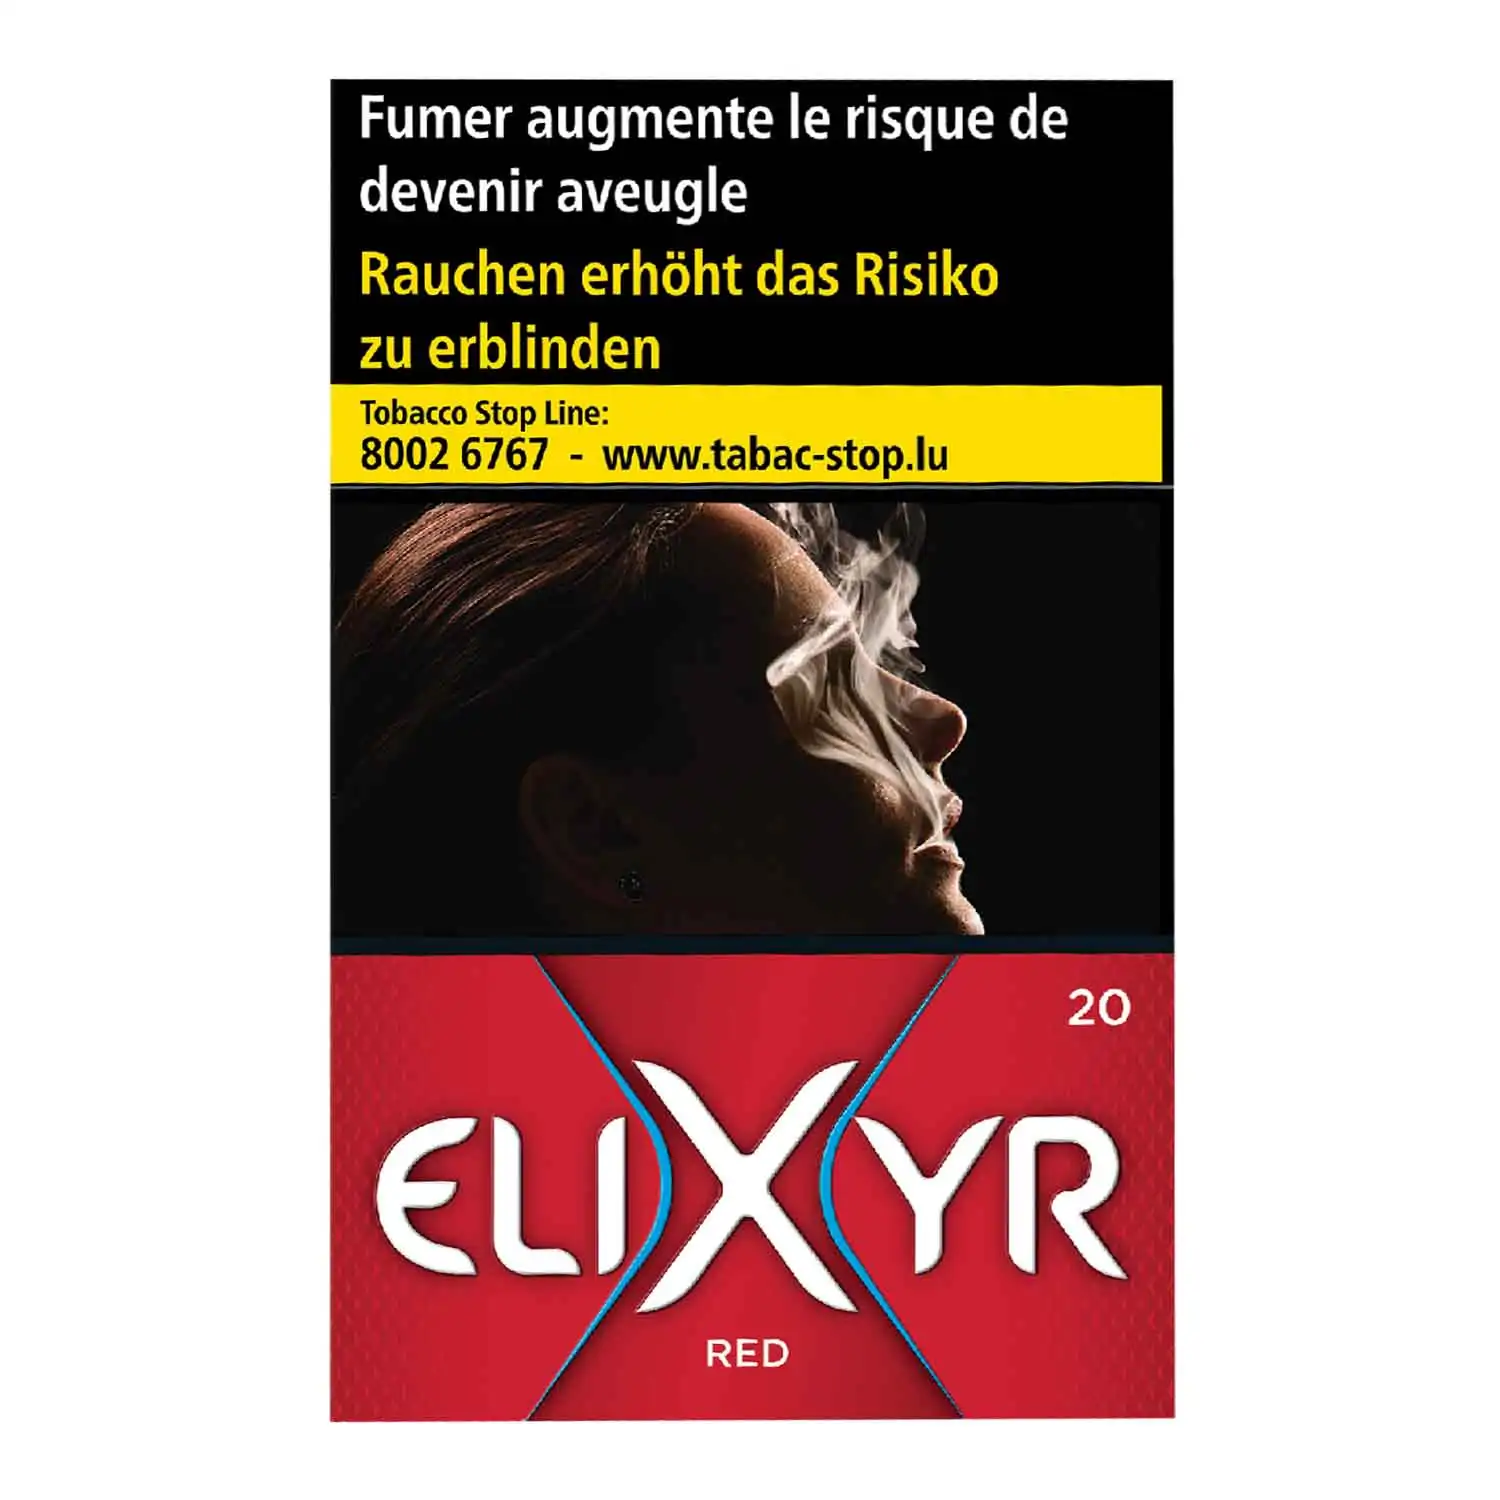 Elixyr red 20 - Buy at Real Tobacco